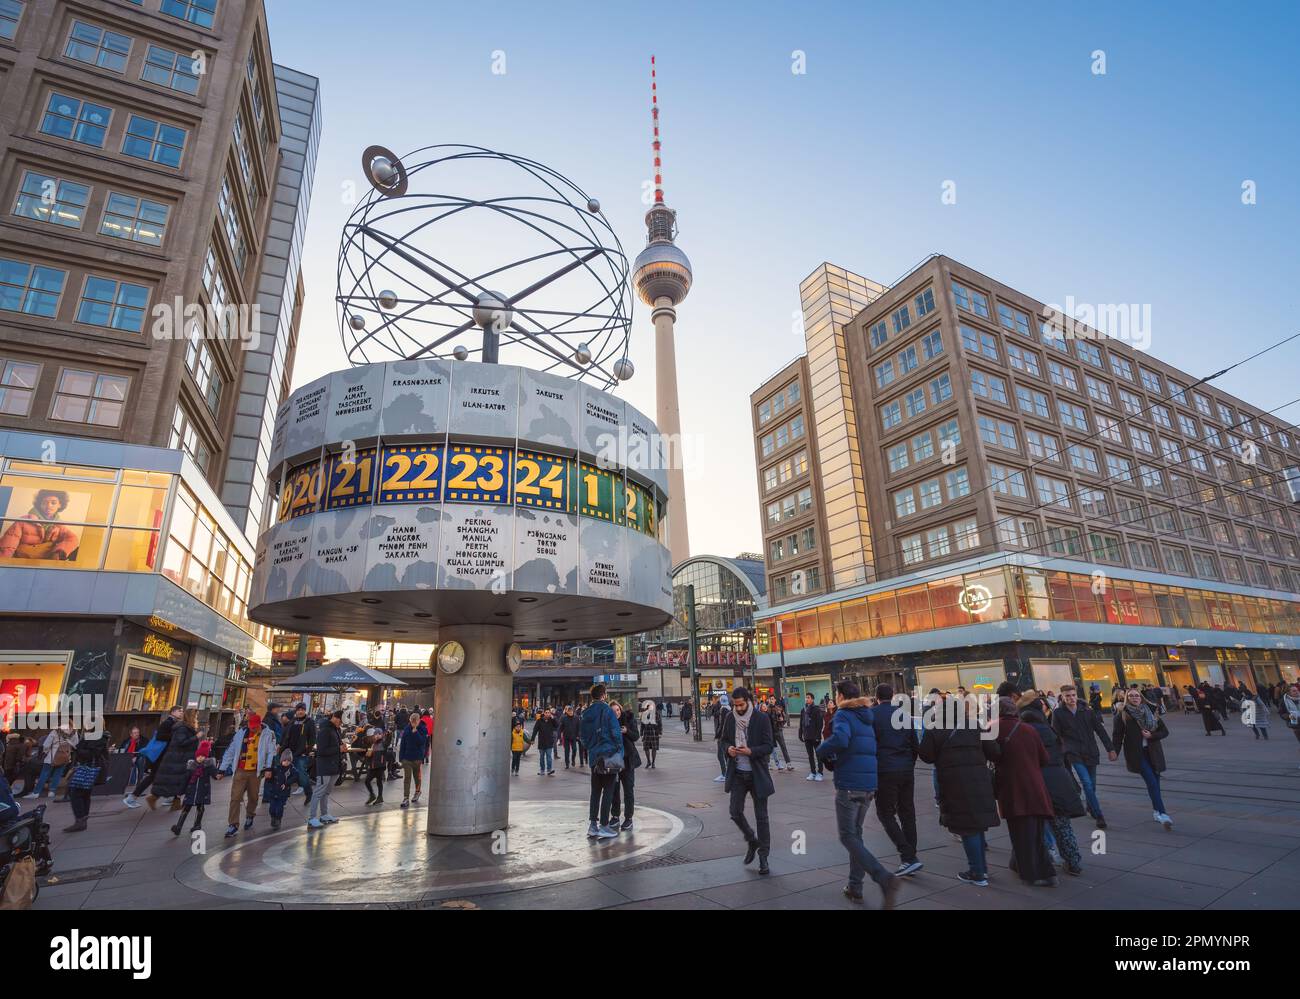 Alexanderplatz Square with World Clock (Weltzeituhr) and TV Tower (Fernsehturm) - Berlin, Germany Stock Photo